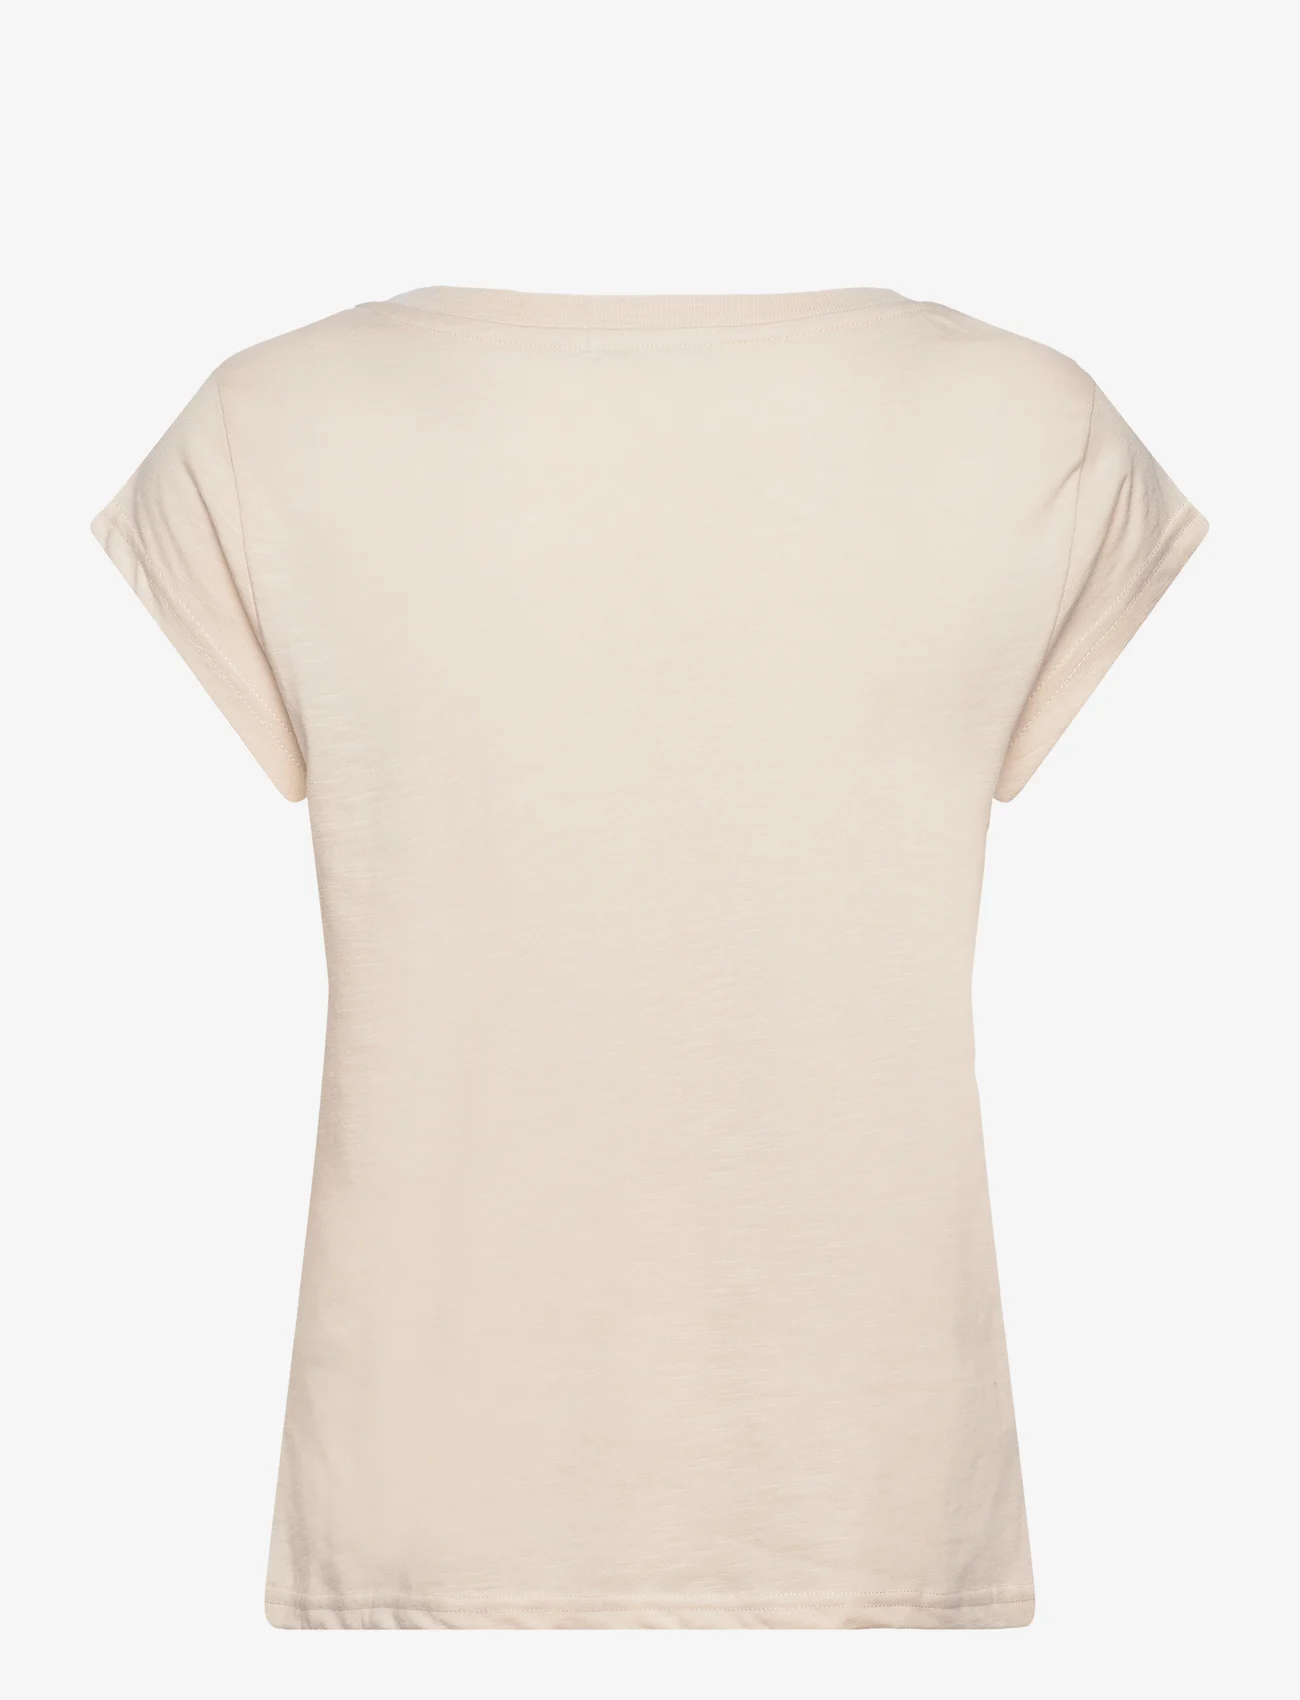 Coster Copenhagen - T-shirt with face print - Cap sleev - t-skjorter - creme - 1